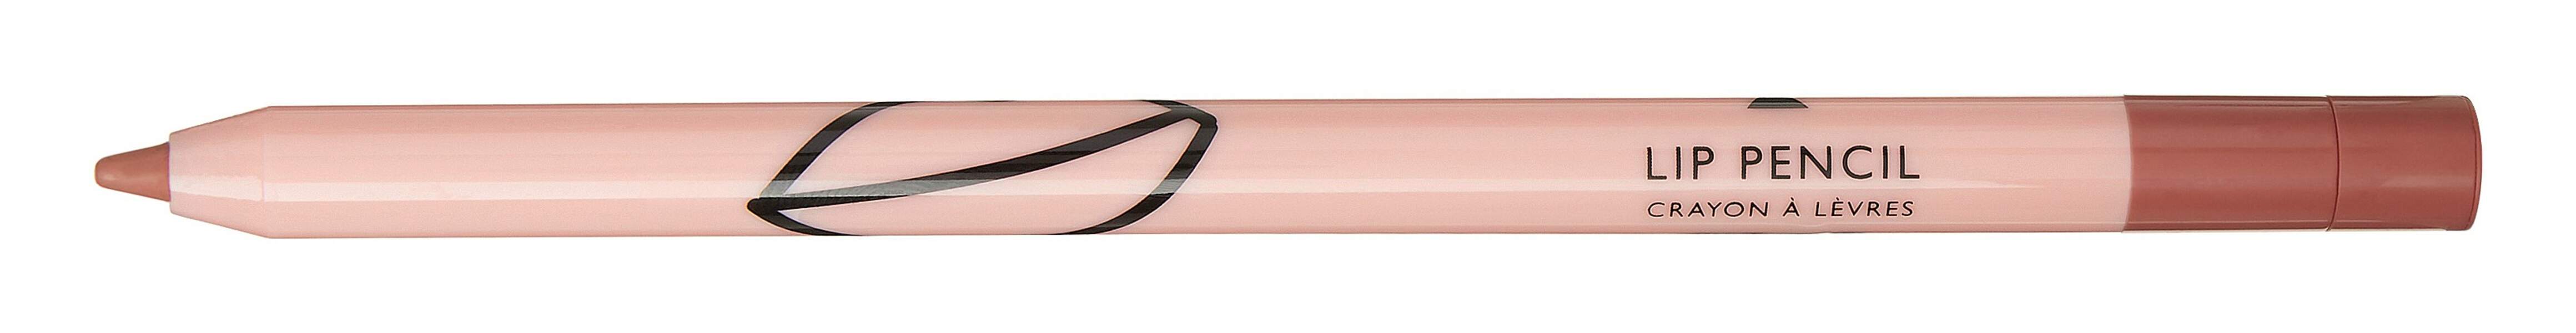 Crayon à lèvres nude Sorted, ASOS Make-up, 6,99€